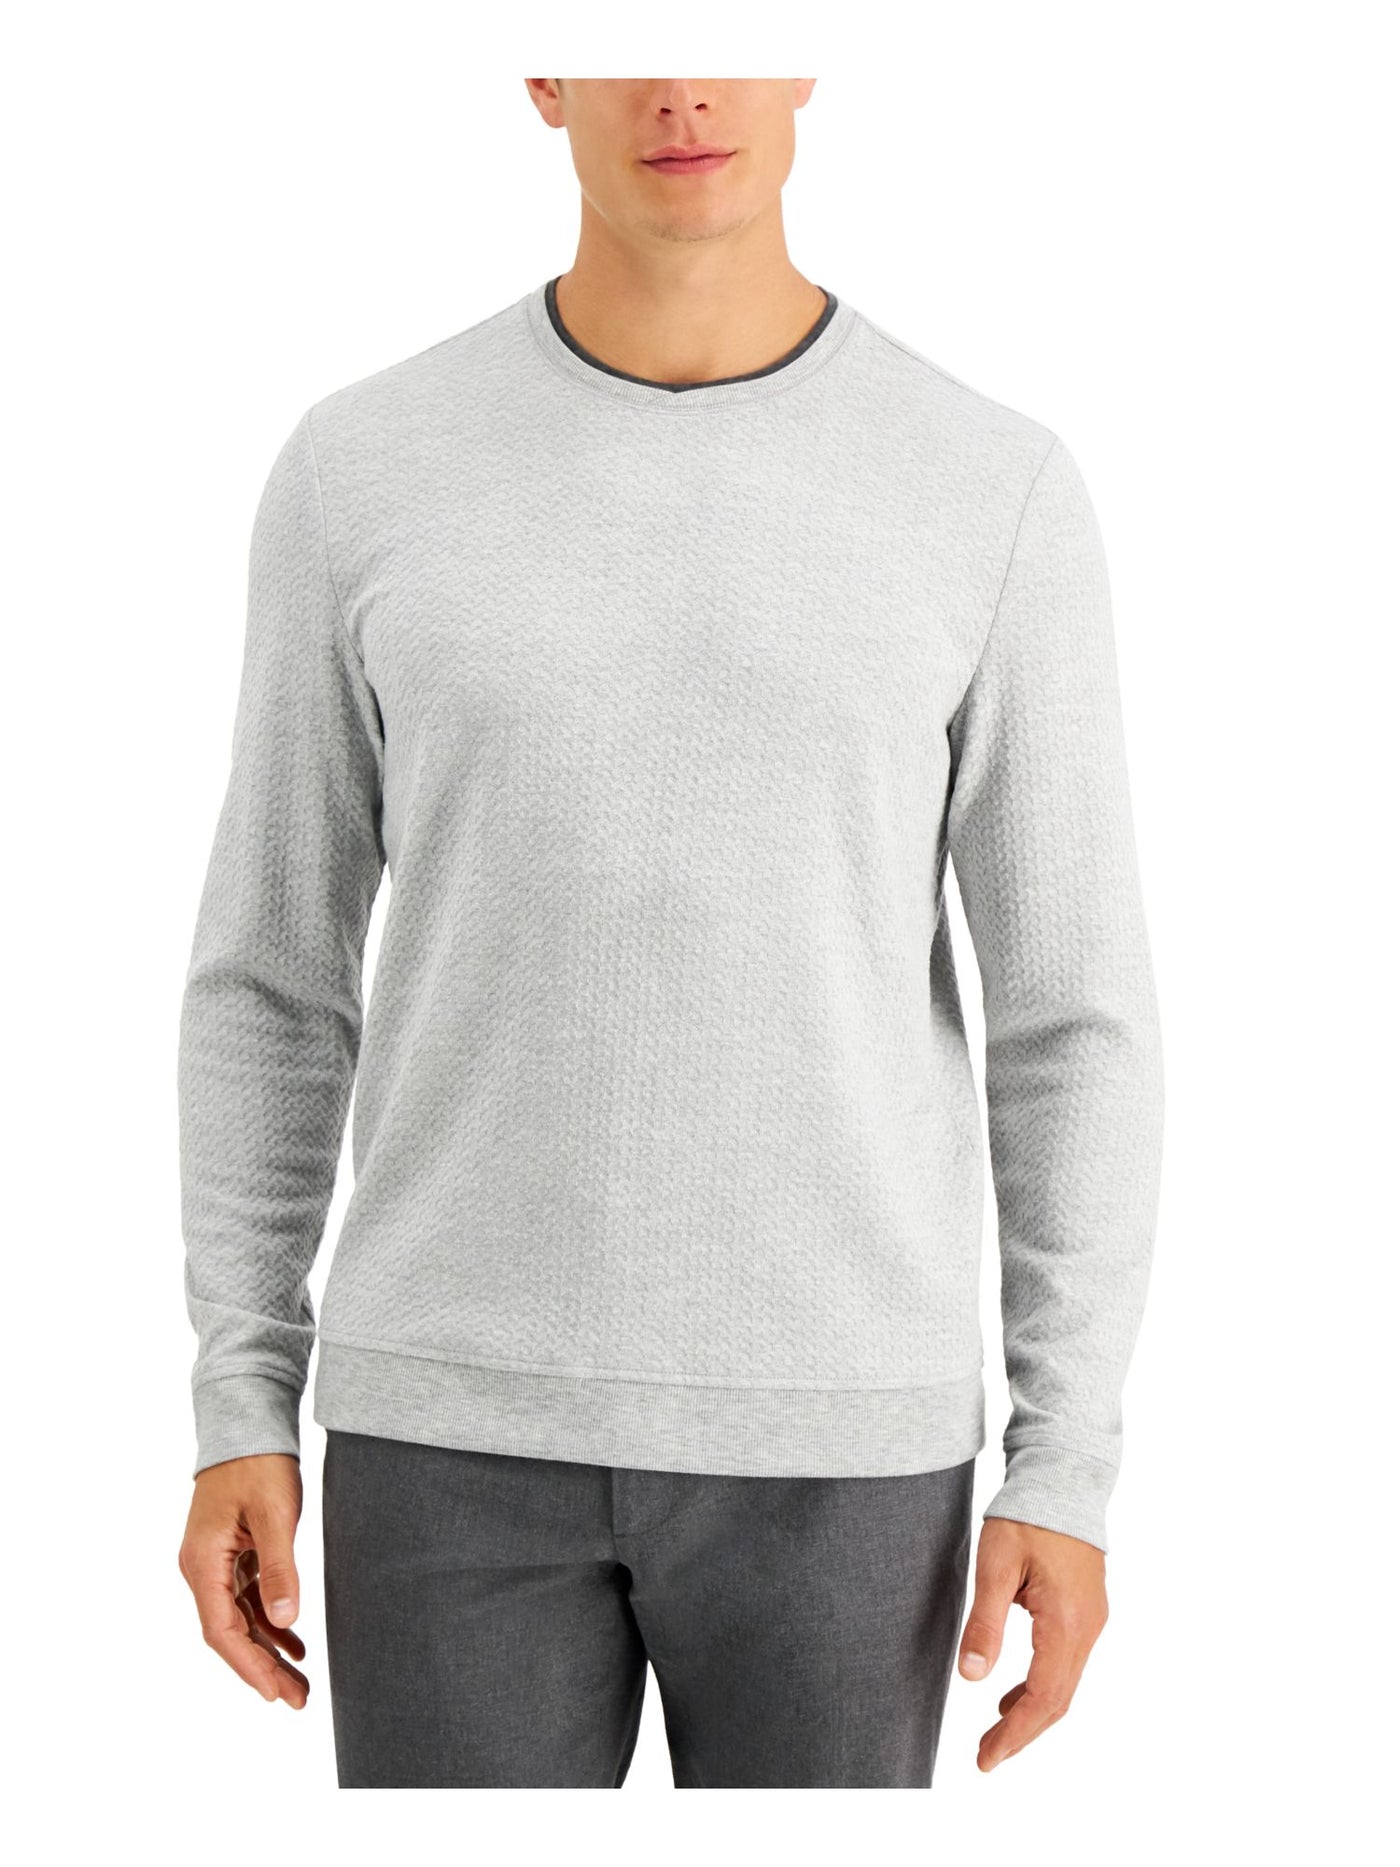 TASSO ELBA Mens Gray Crew Neck Pullover Sweater XXL